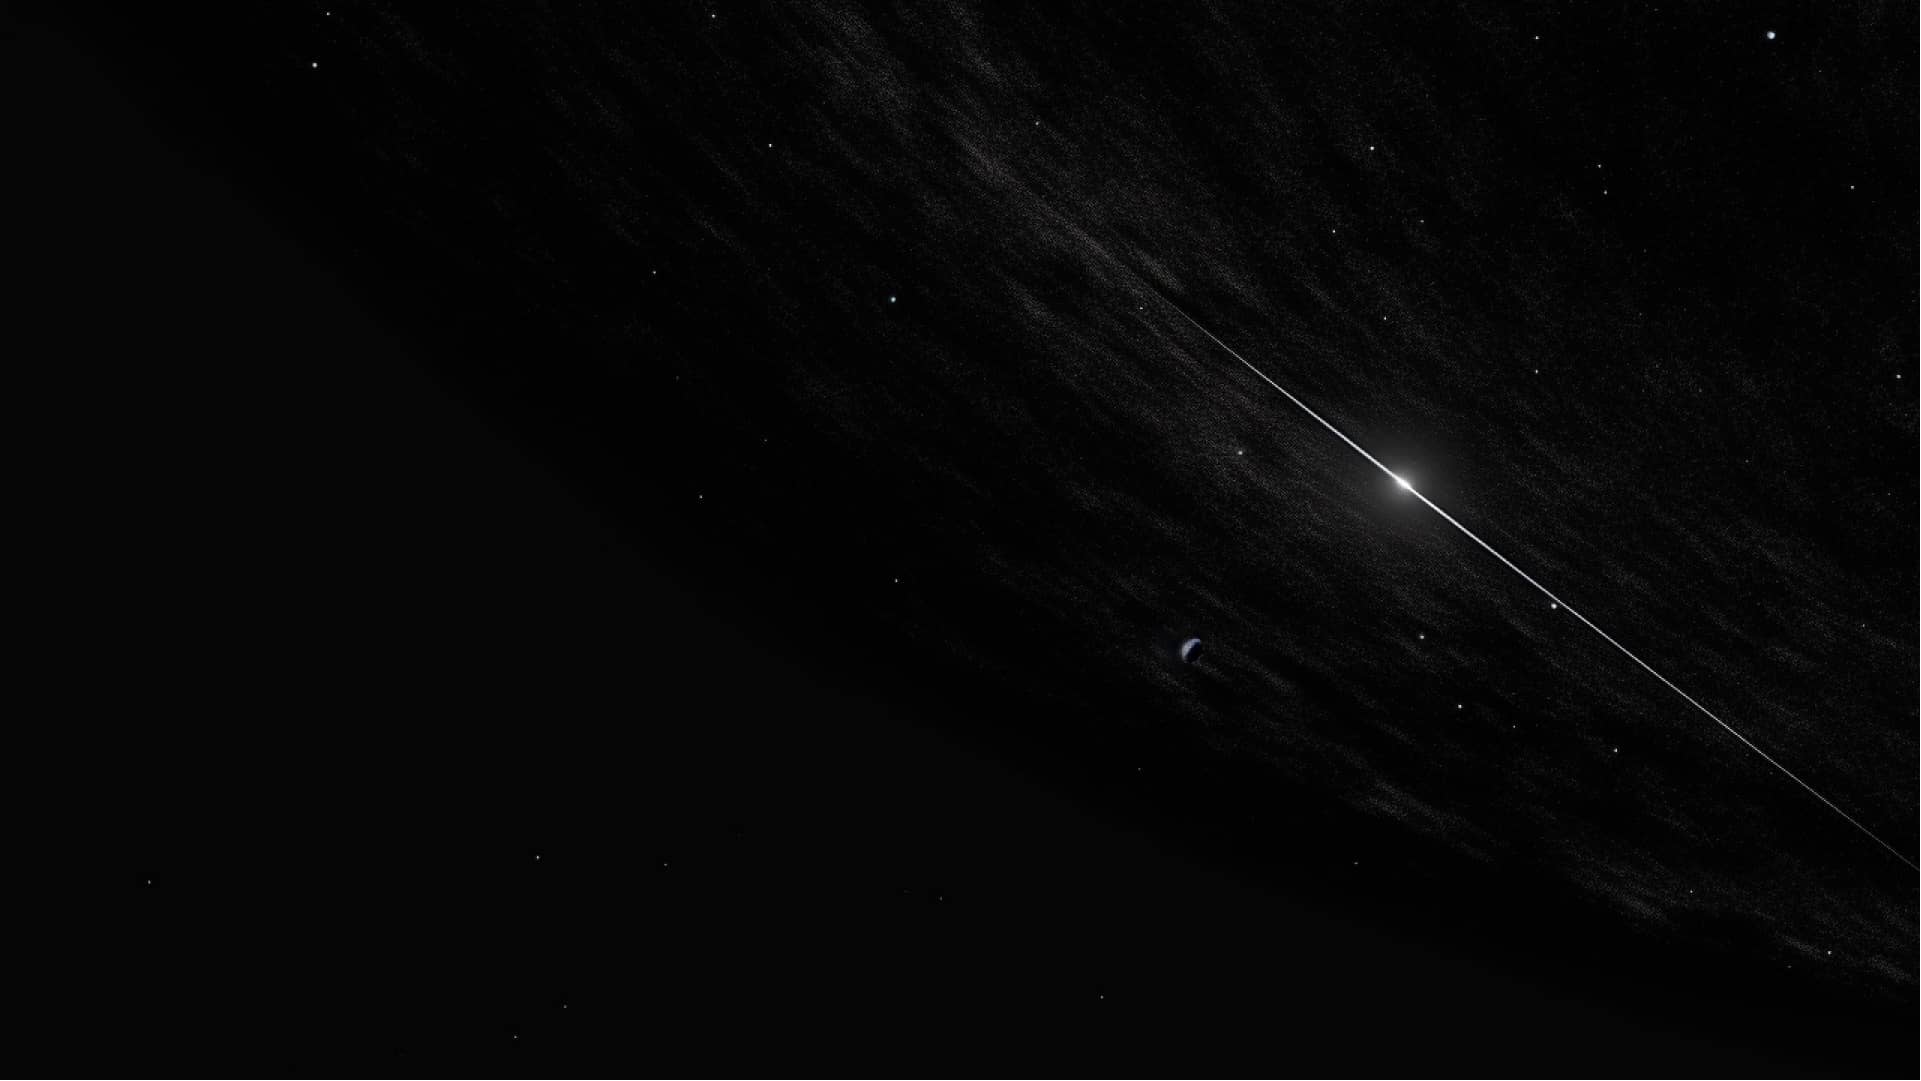 saebender_realistic_view_of_sky_nighttime_satellite_streaks_a1447698-24de-47b8-9c91-7836d575cdbd-1